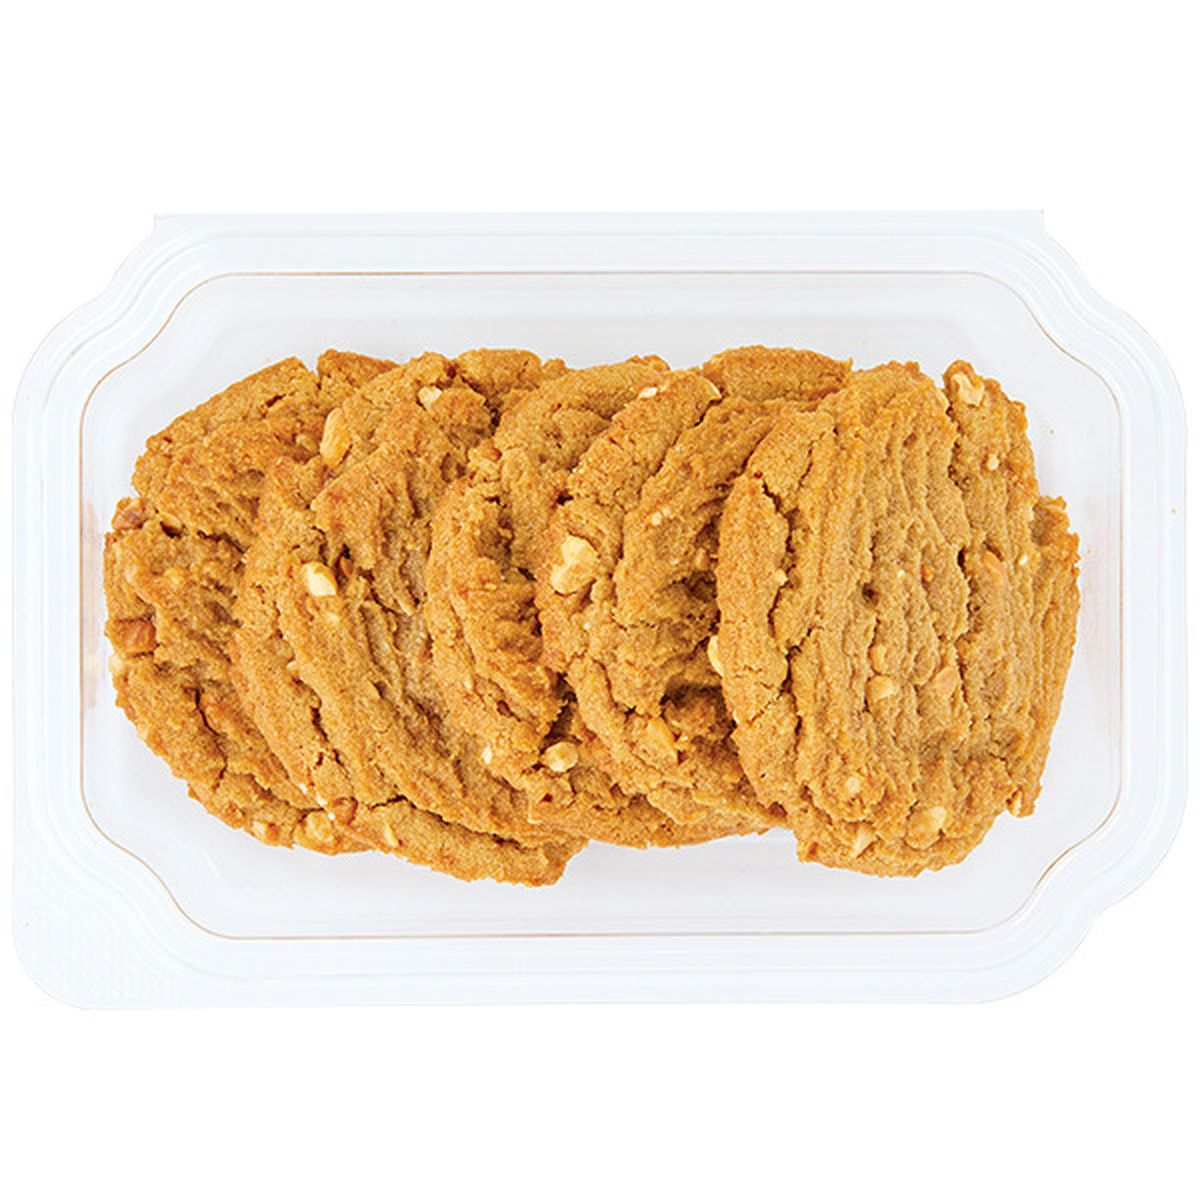 Calories in Wegmans Vegan Peanut Butter Cookies 5 pack